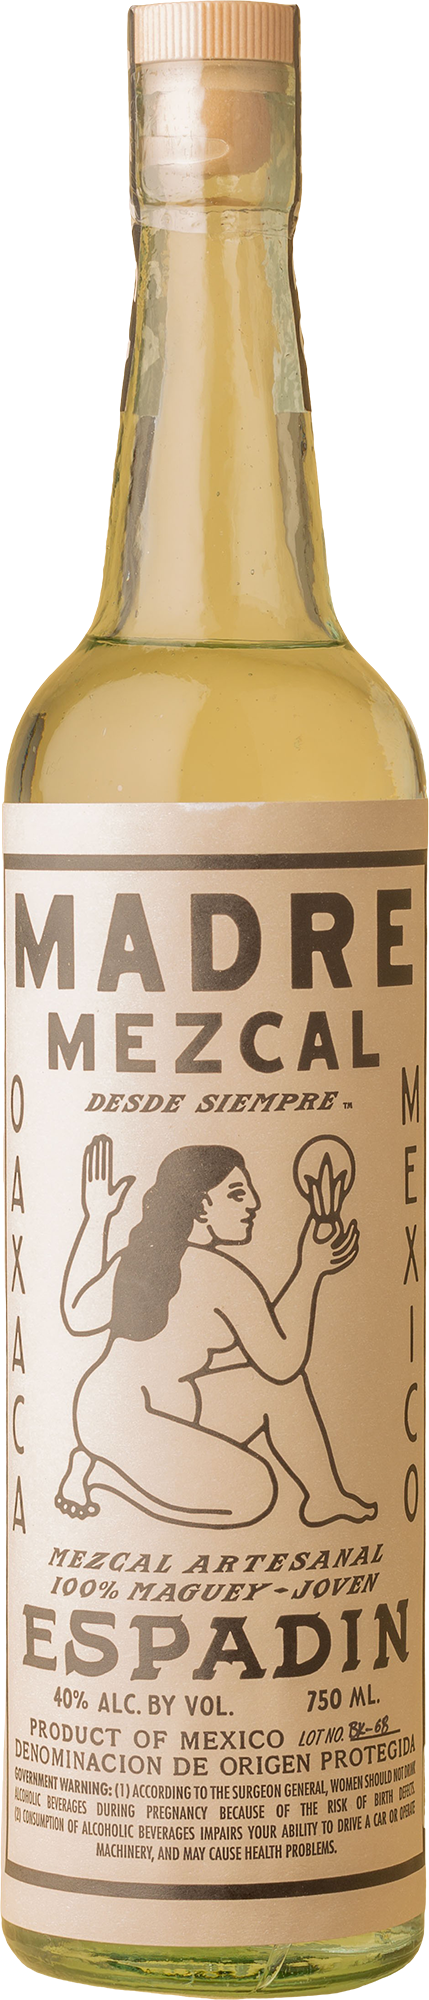 Madre - Mezcal Espadin Not Wine